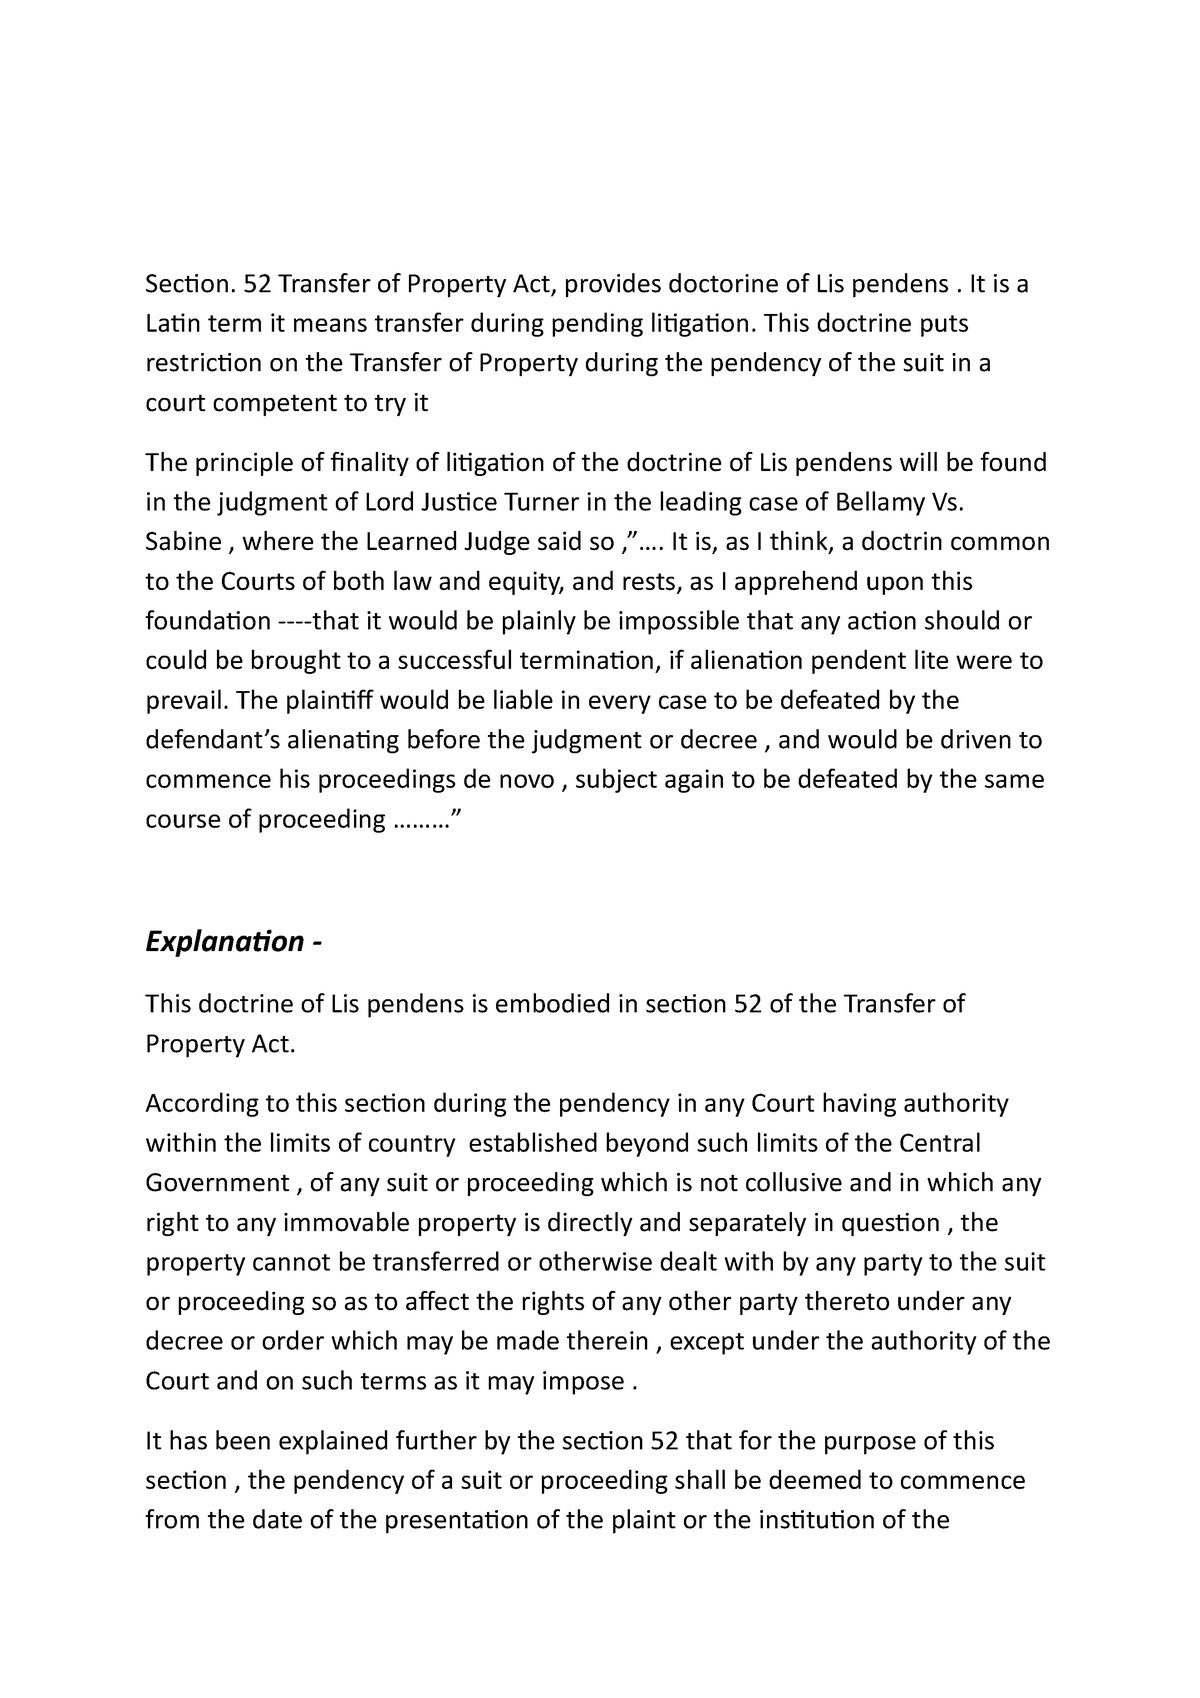 doctrine of lis pendens pdf